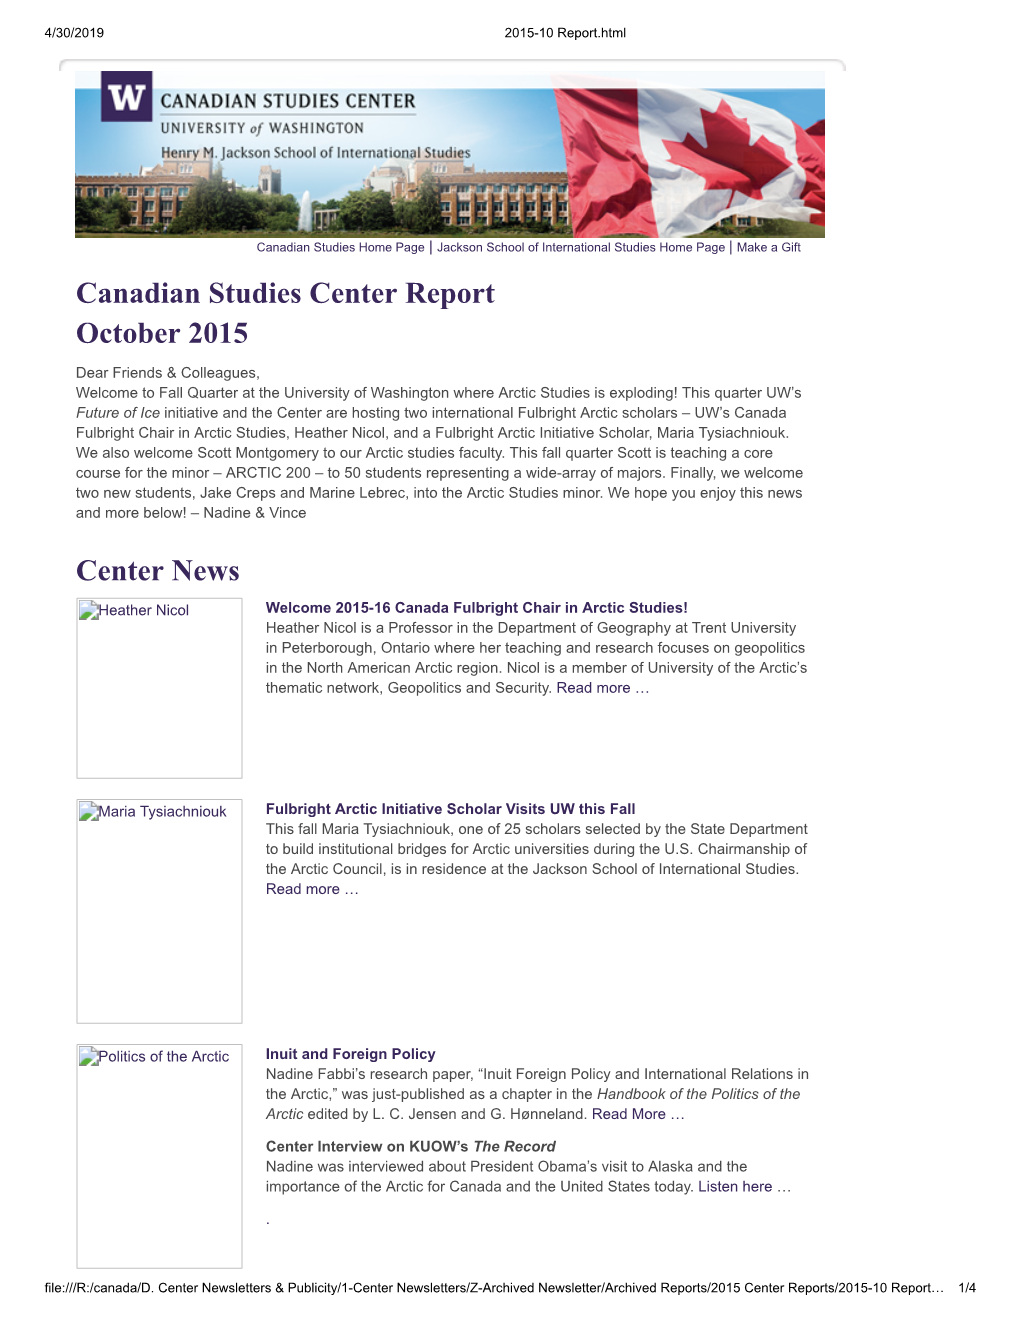 Canadian Studies Center Report October 2015 Center News